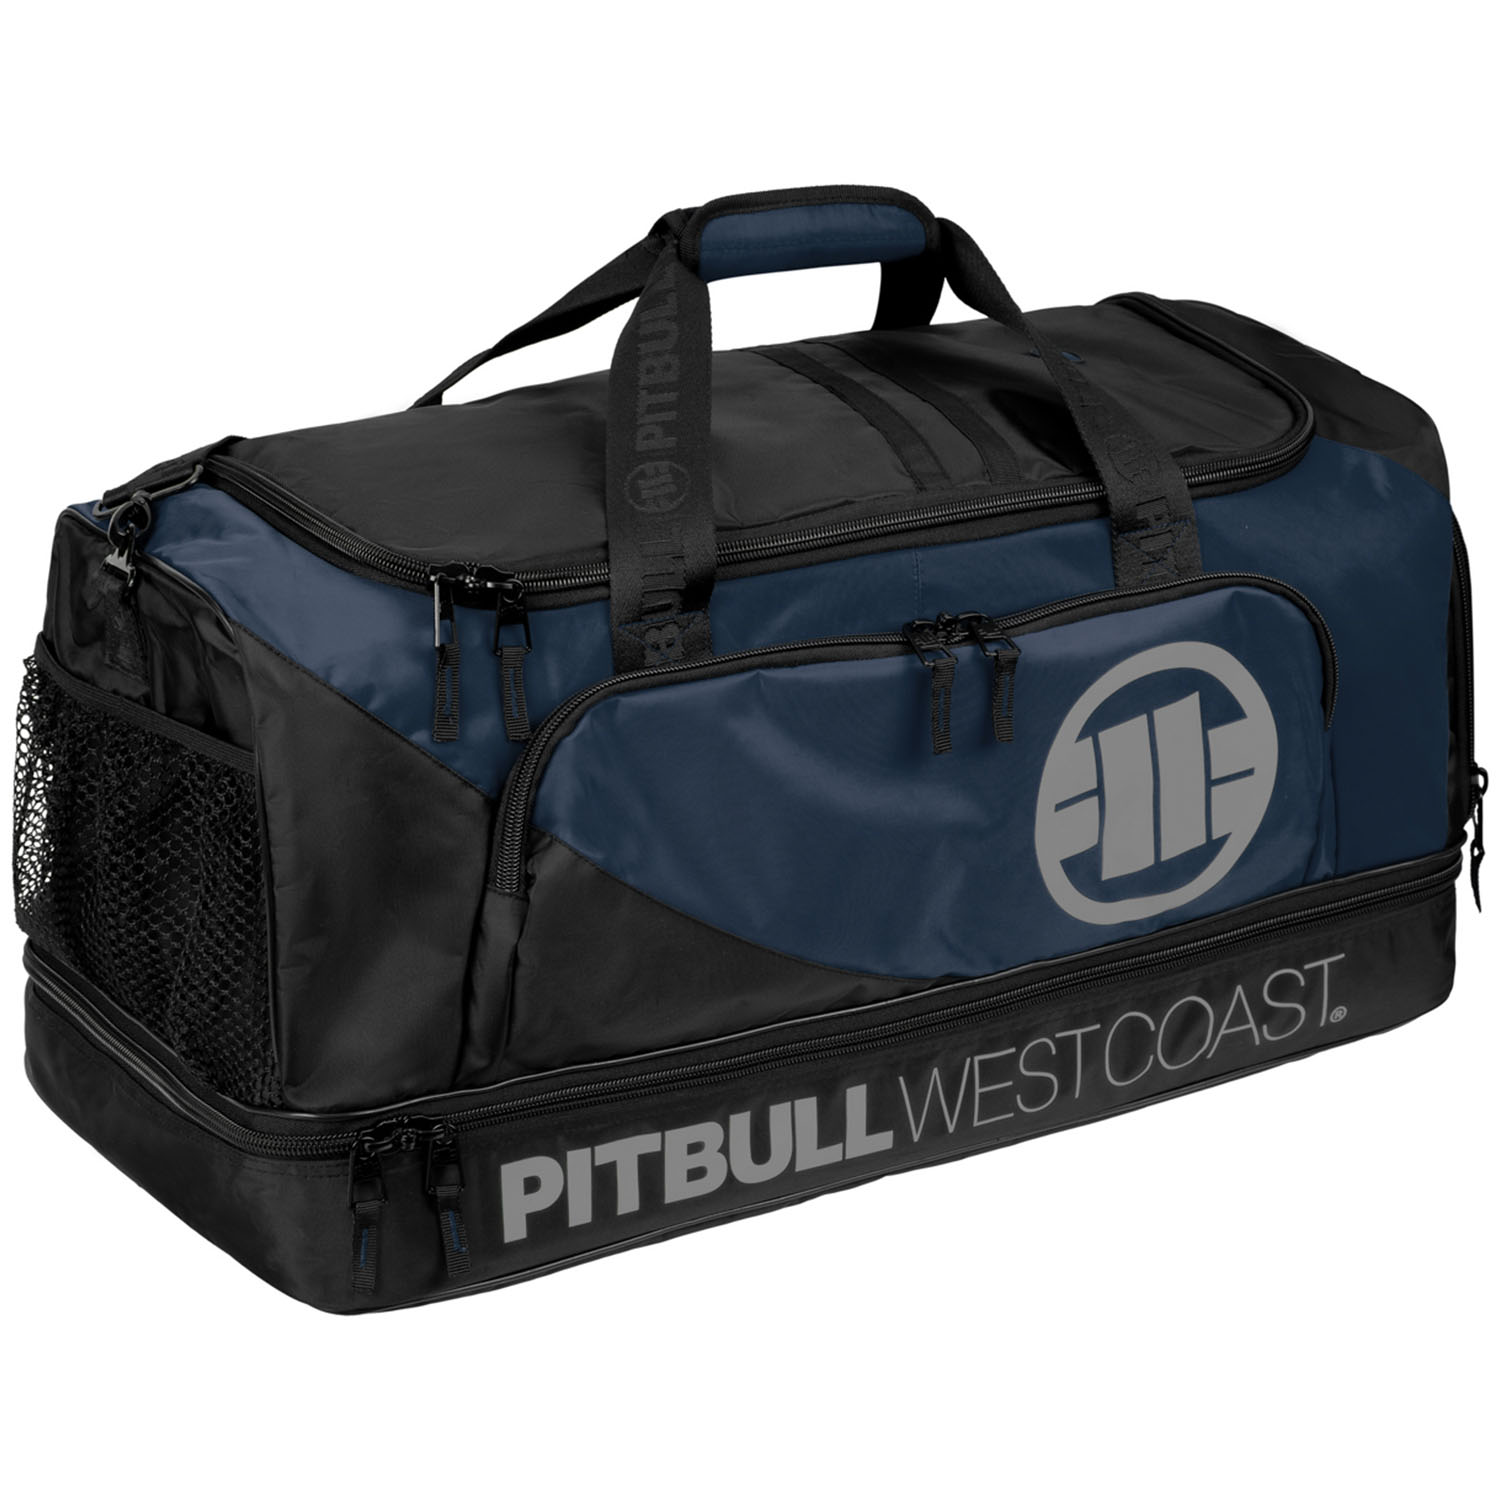 Pit Bull West Coast Sporttasche, Big Duffle Bag, Logo TNT, schwarz-navy